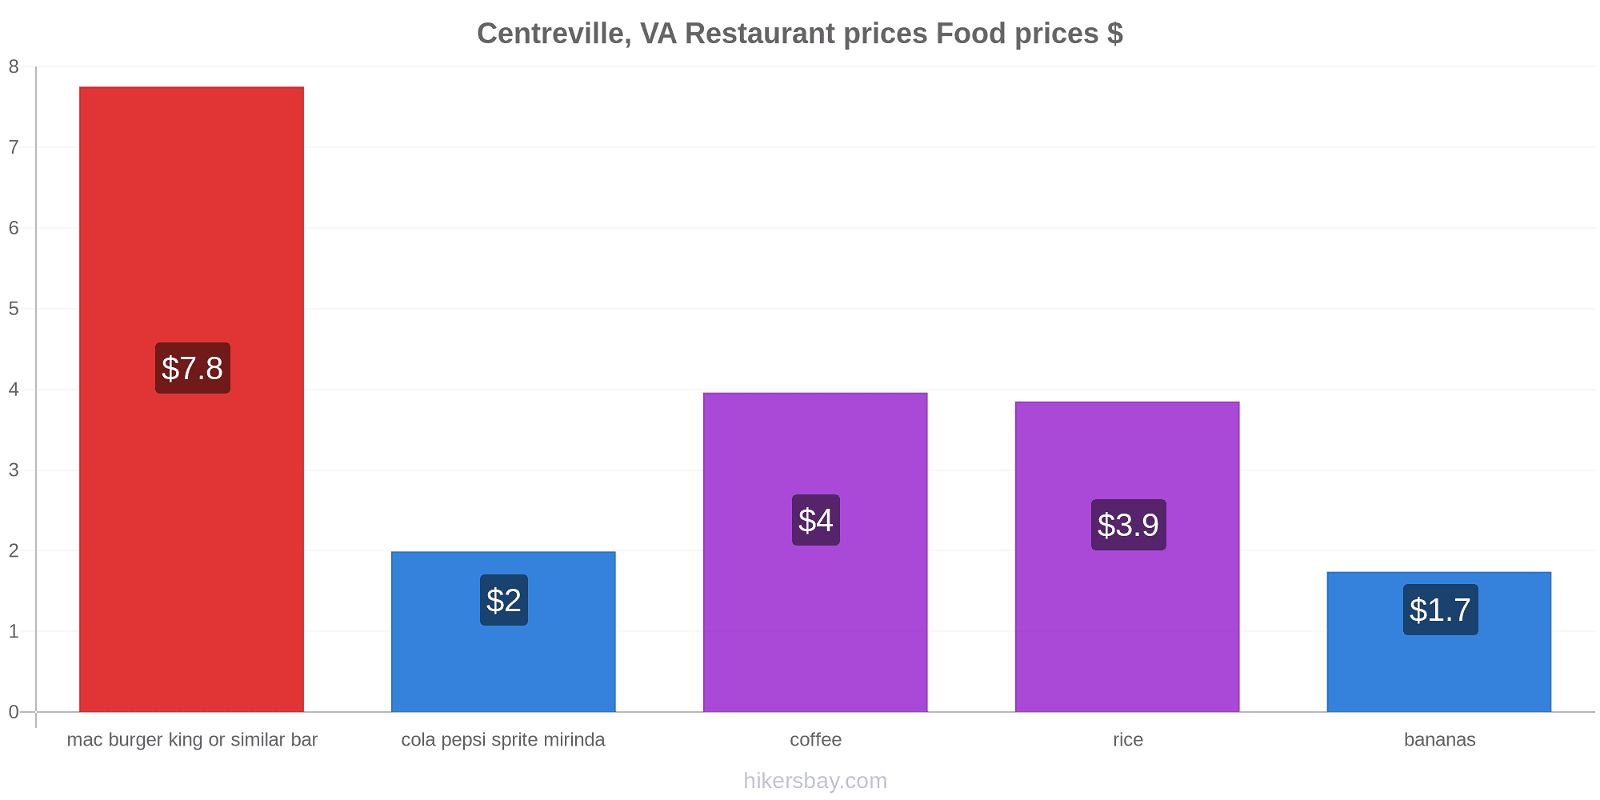 Centreville, VA price changes hikersbay.com